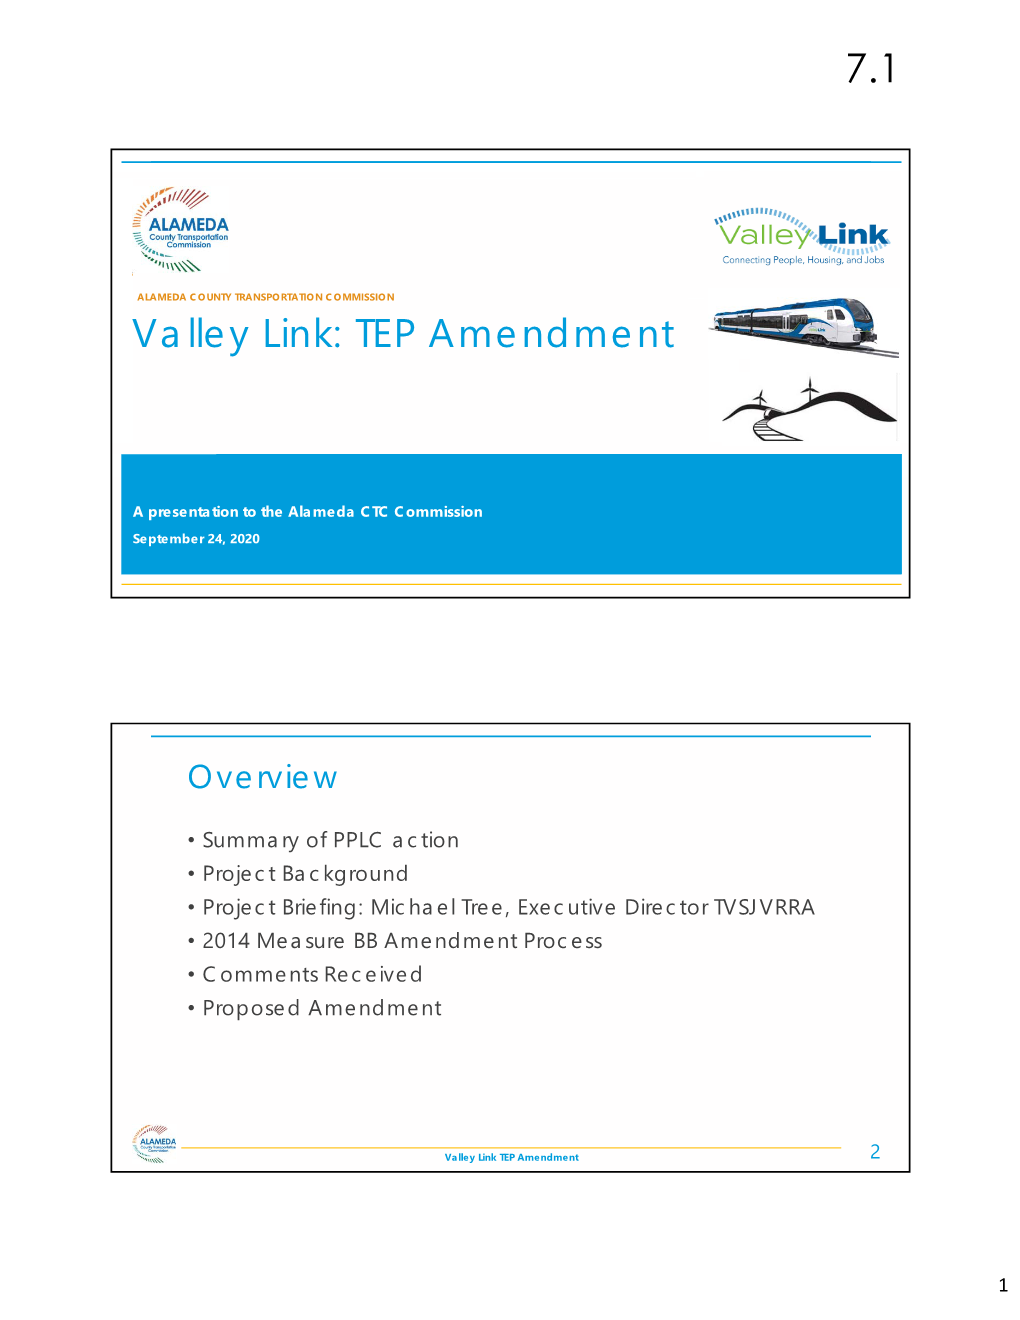 Valley Link: TEP Amendment